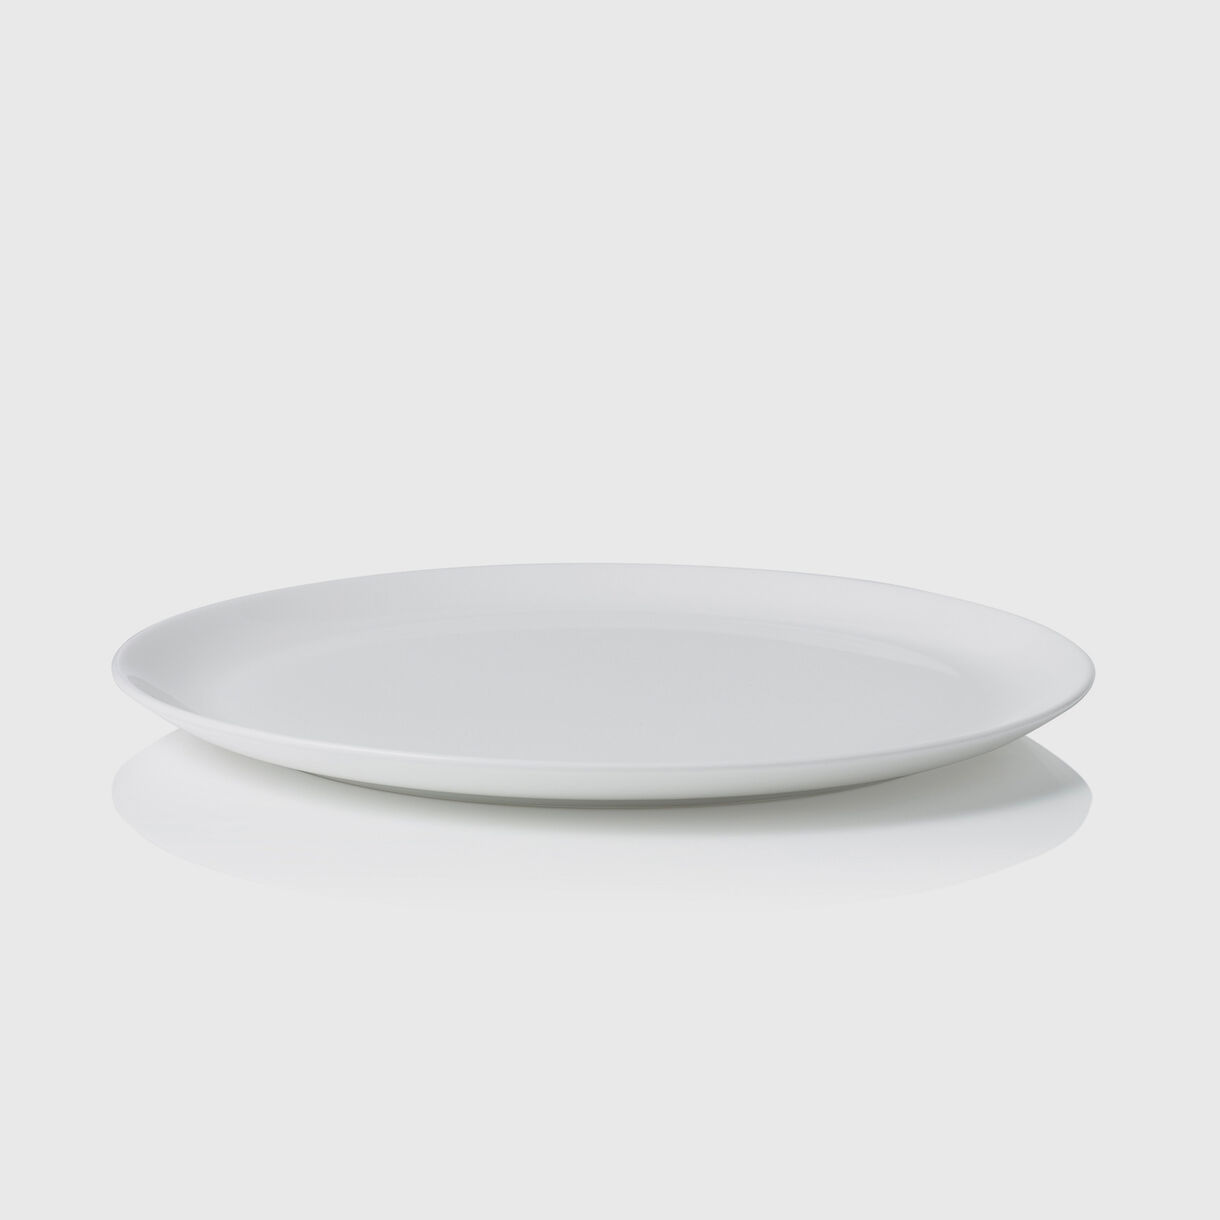 David Caon by Noritake Dinner Plate